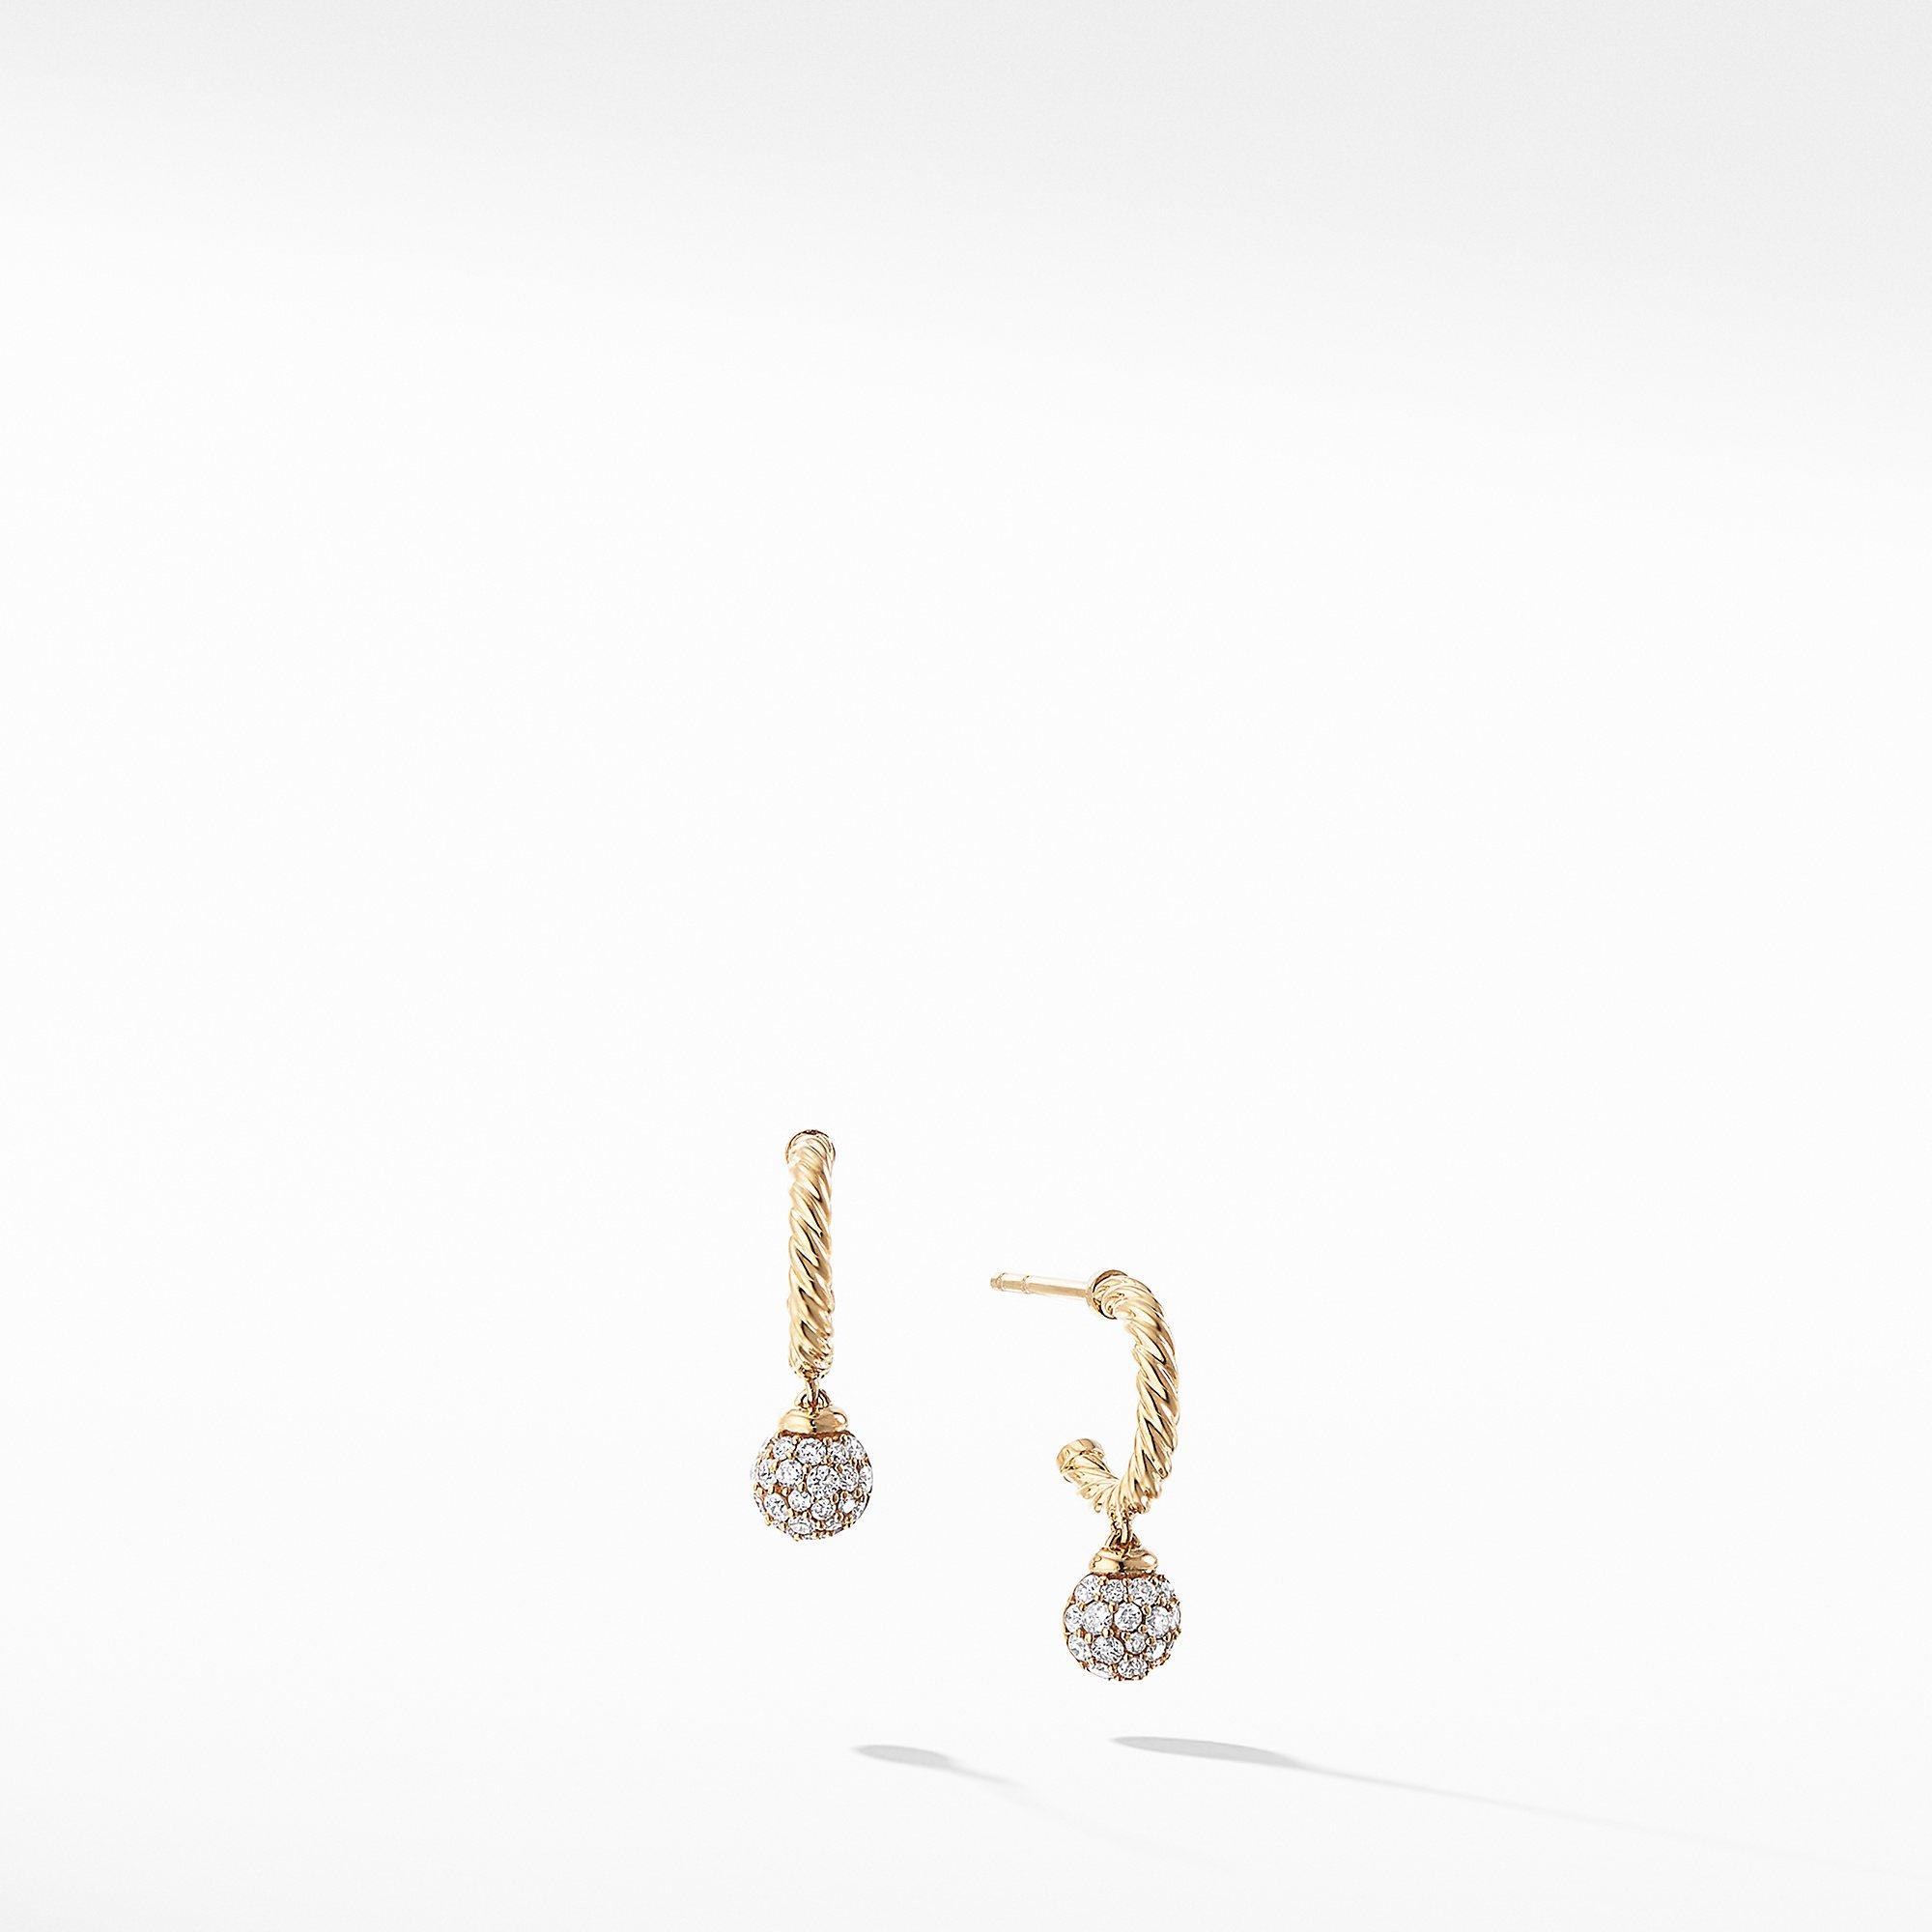 David Yurman Solari Hoop Pave Earrings with Diamonds in 18k Gold